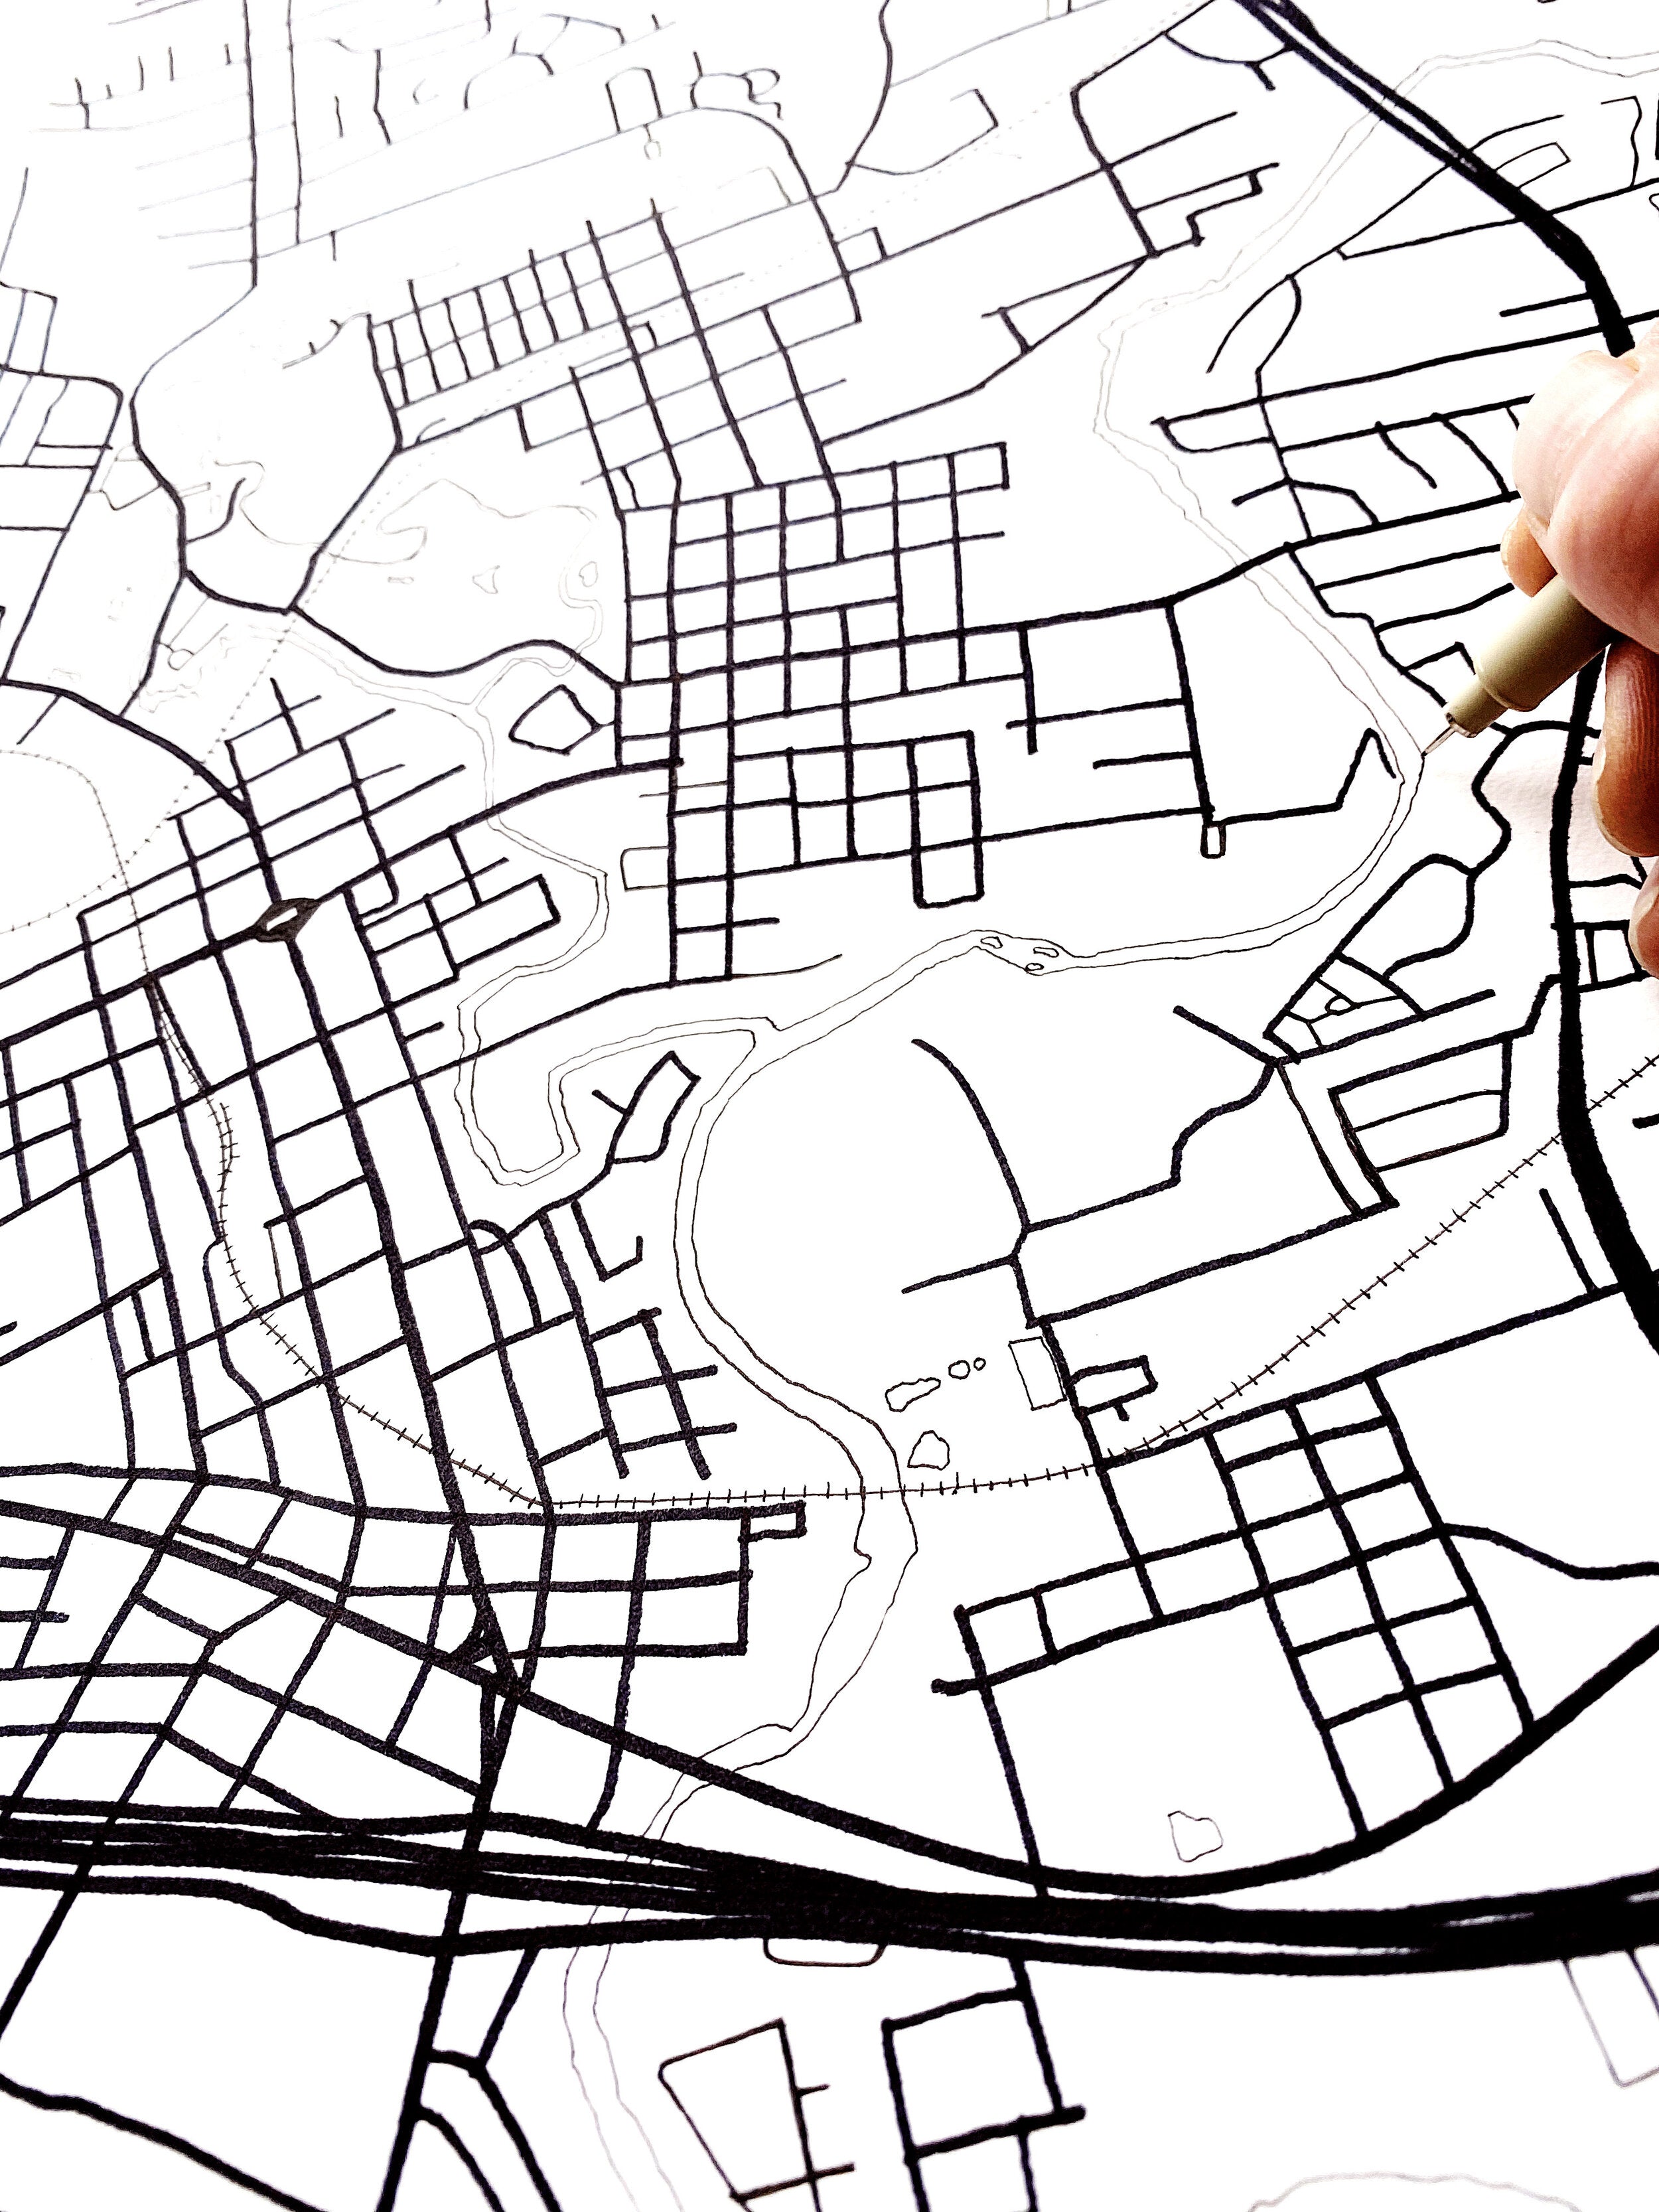 NEW BRAUNFELS Watercolor City Blocks Map: PRINT